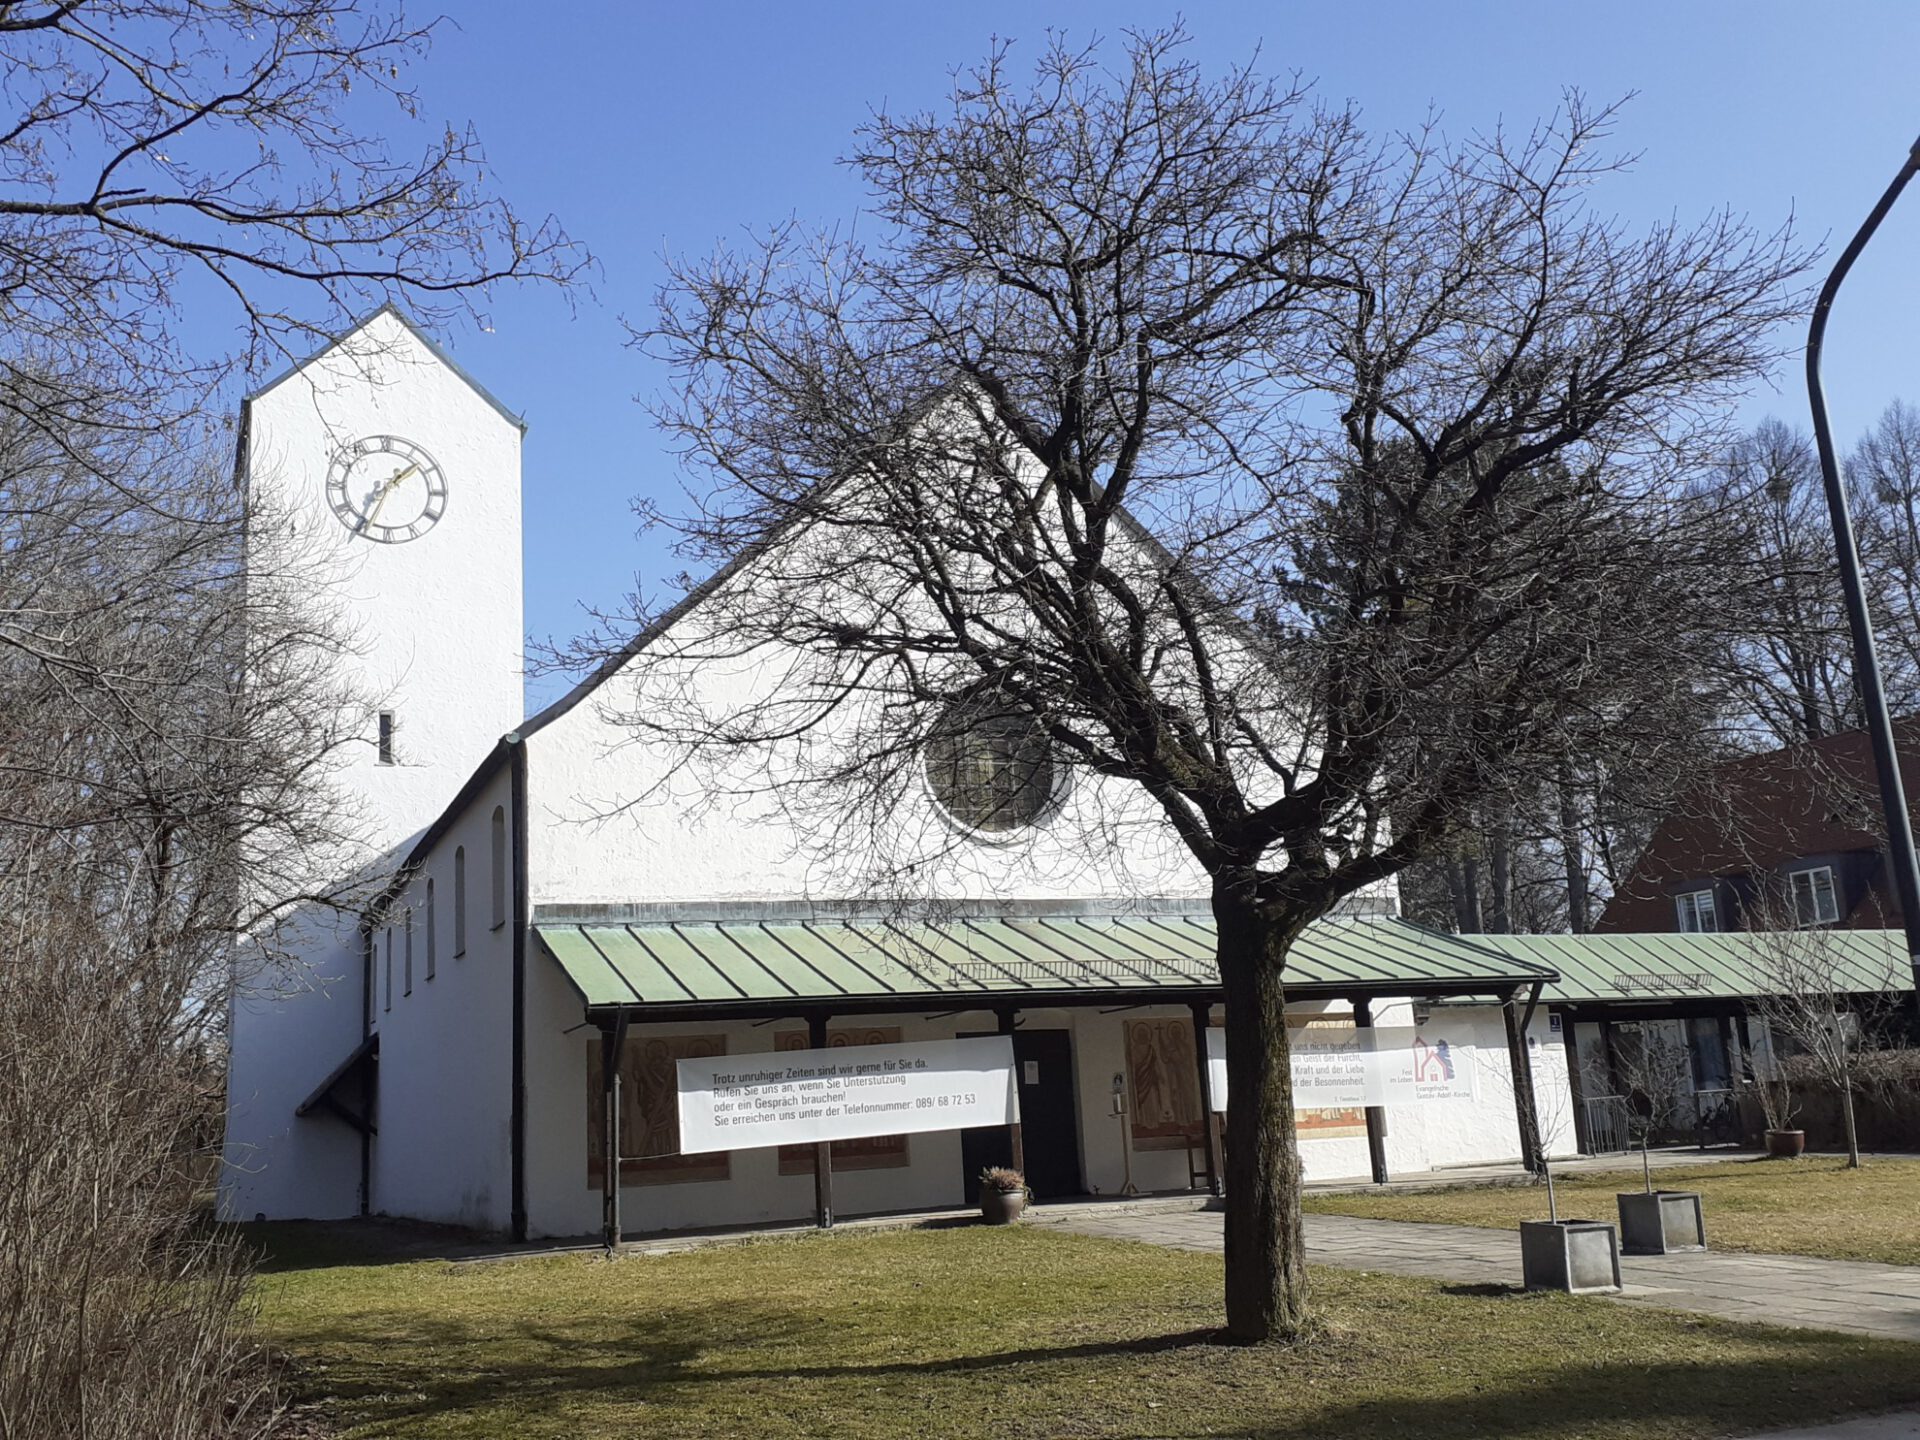 Gustav-Adolf-Kirche München-Ramersdorf